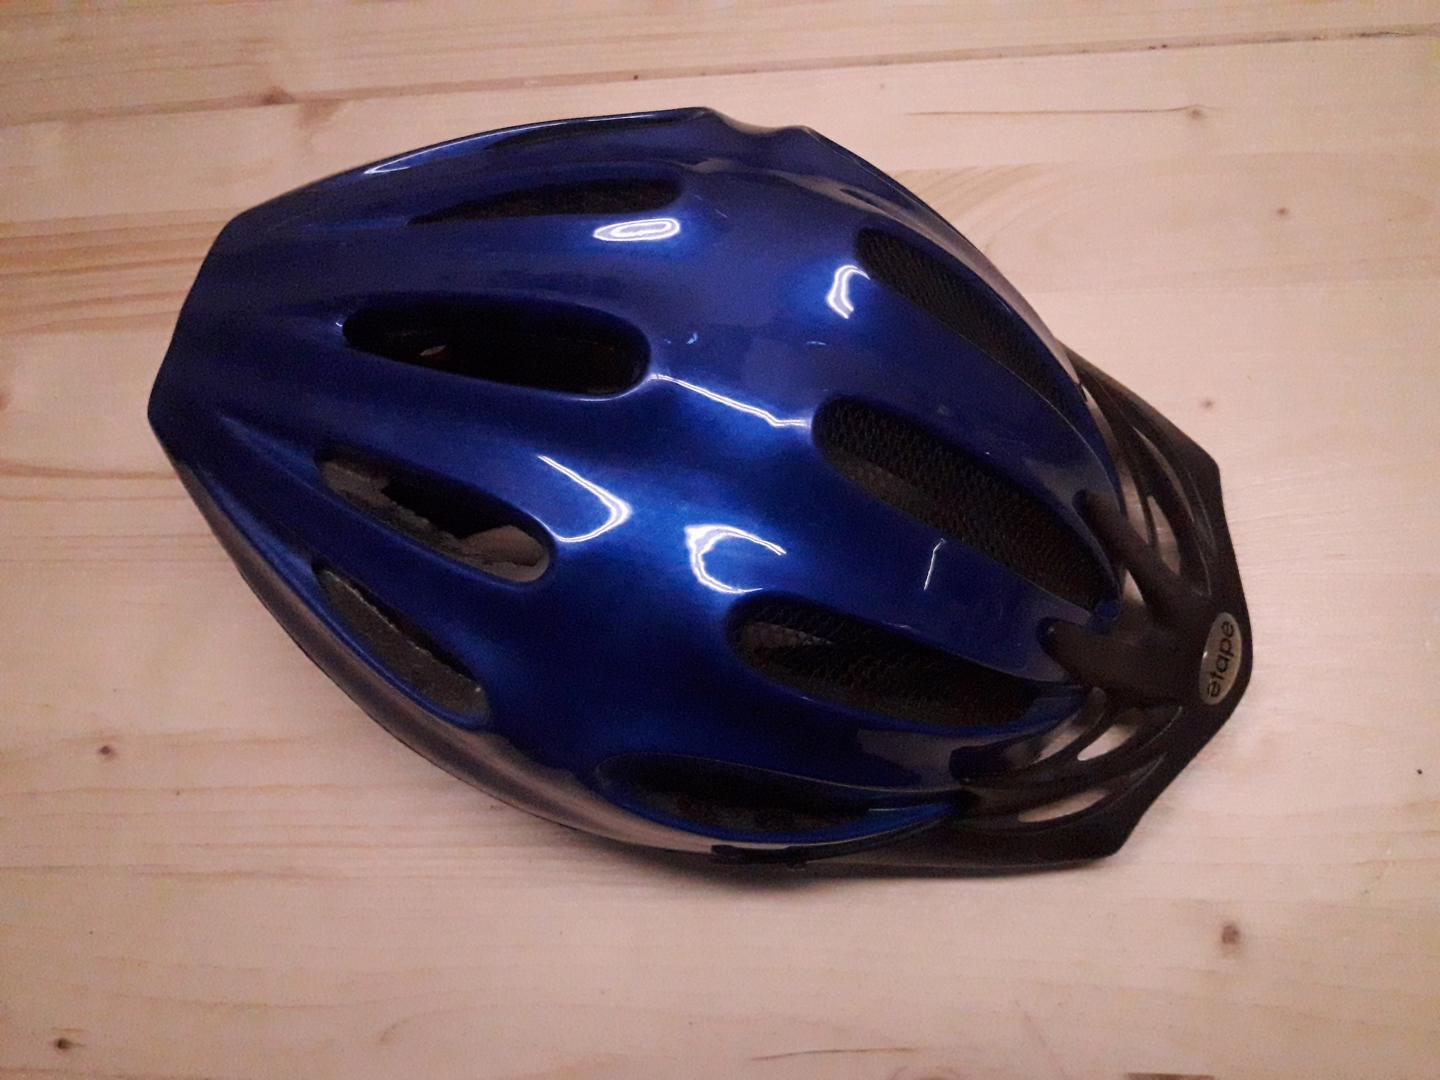 Cyklistická helma - foto 1